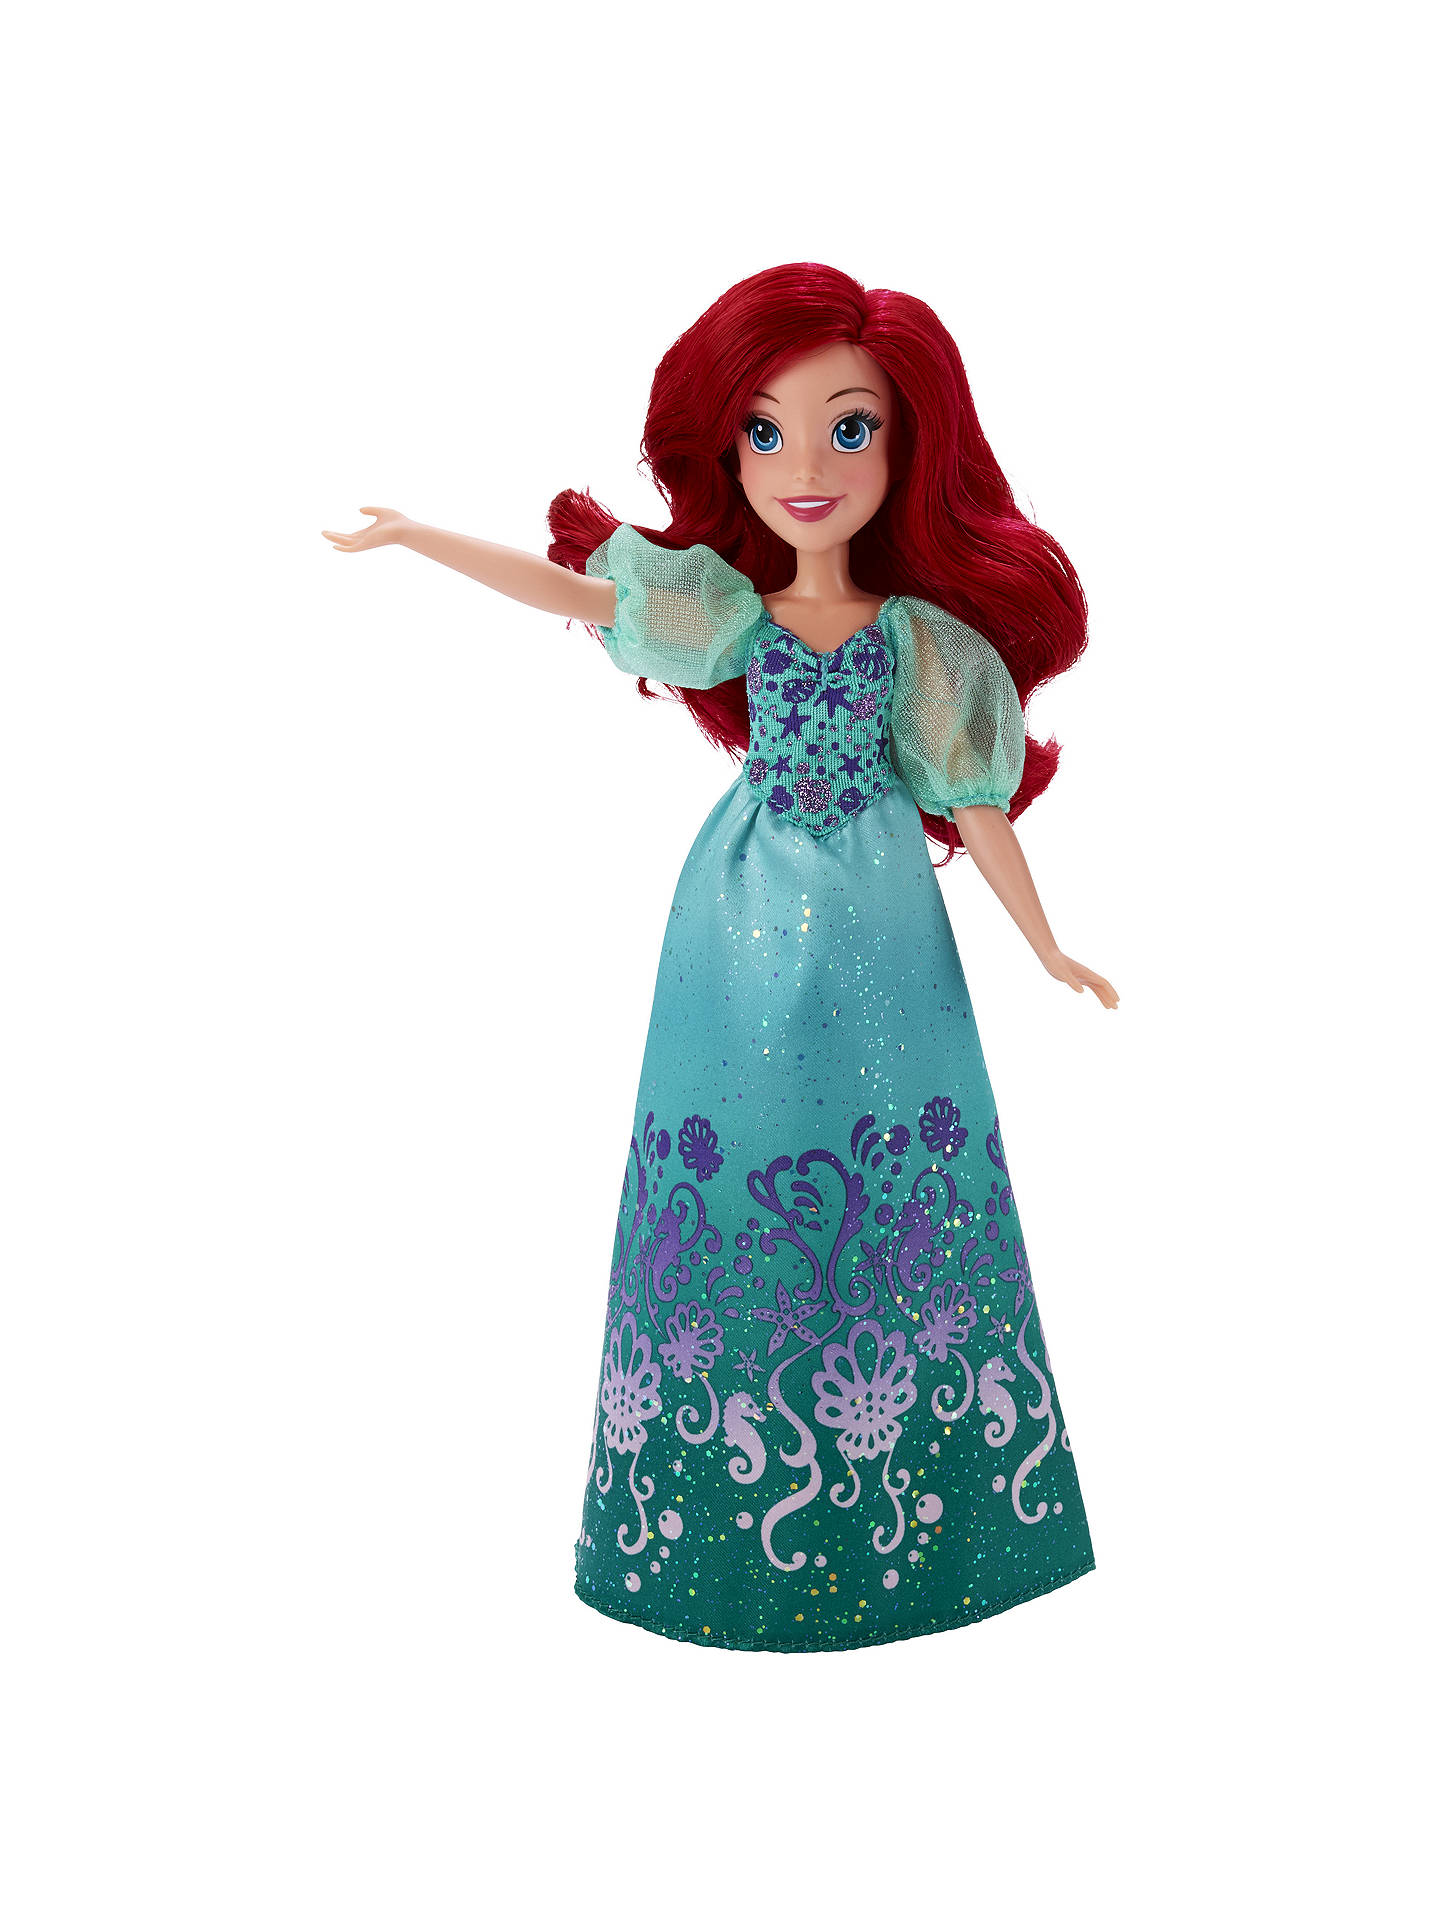 Disney Princess Ariel Doll with Royal Clips Fashion, One 